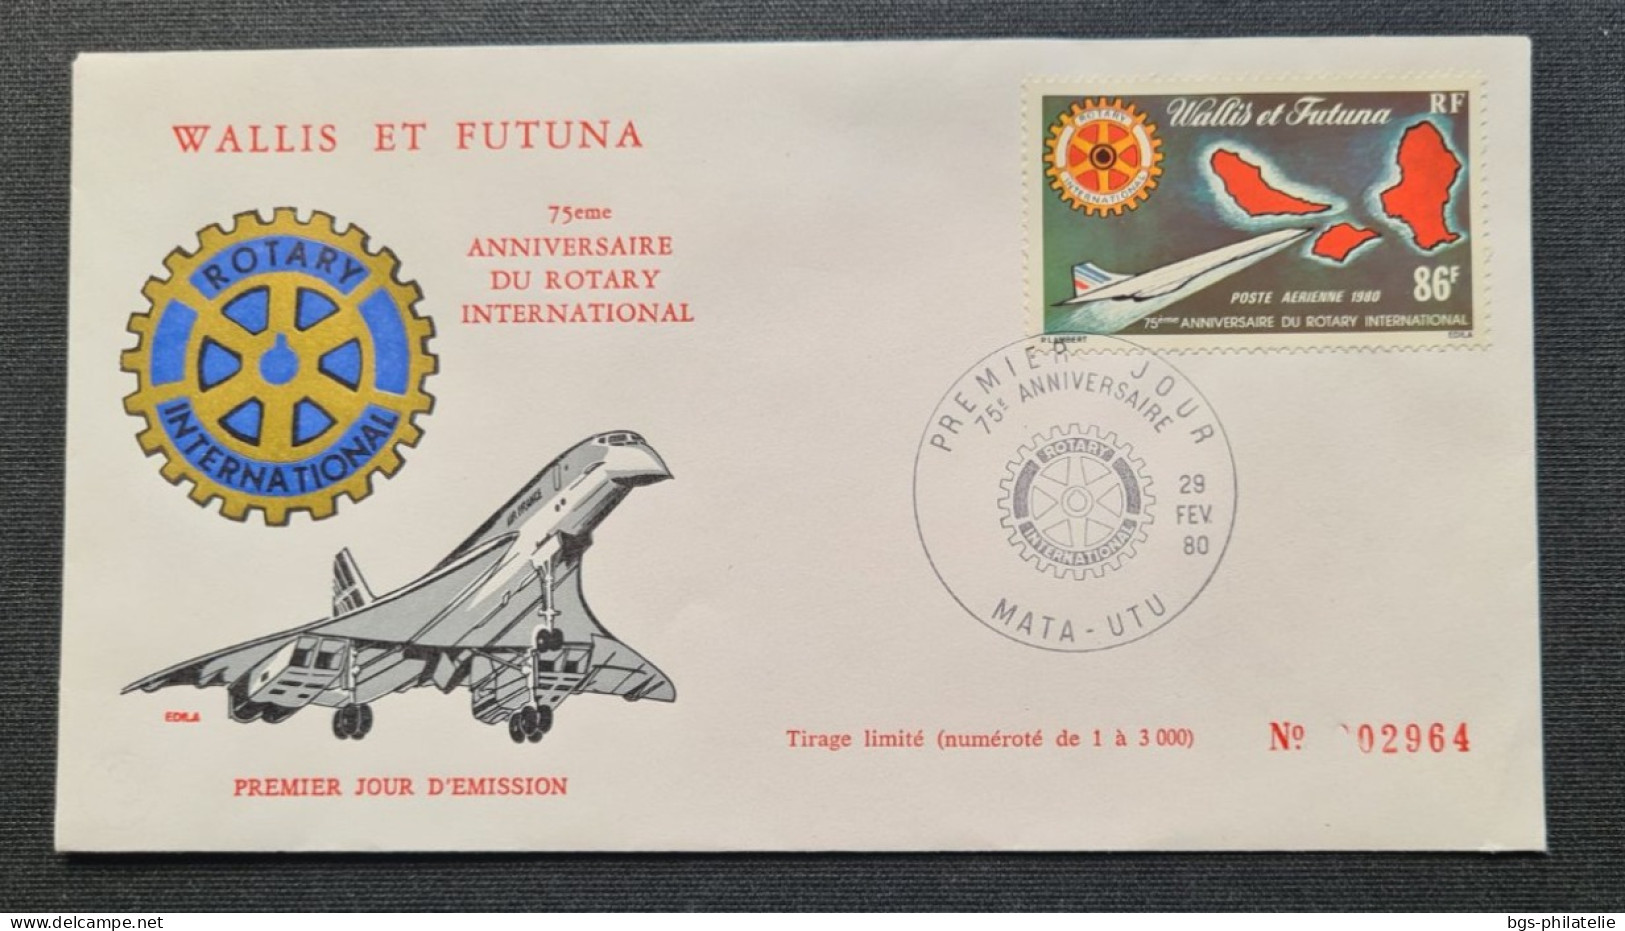 Concorde,  75 ème Anniversaire Du Rotary International.  WALLIS ET FUTUNA,  LE 29/2/80. - Concorde